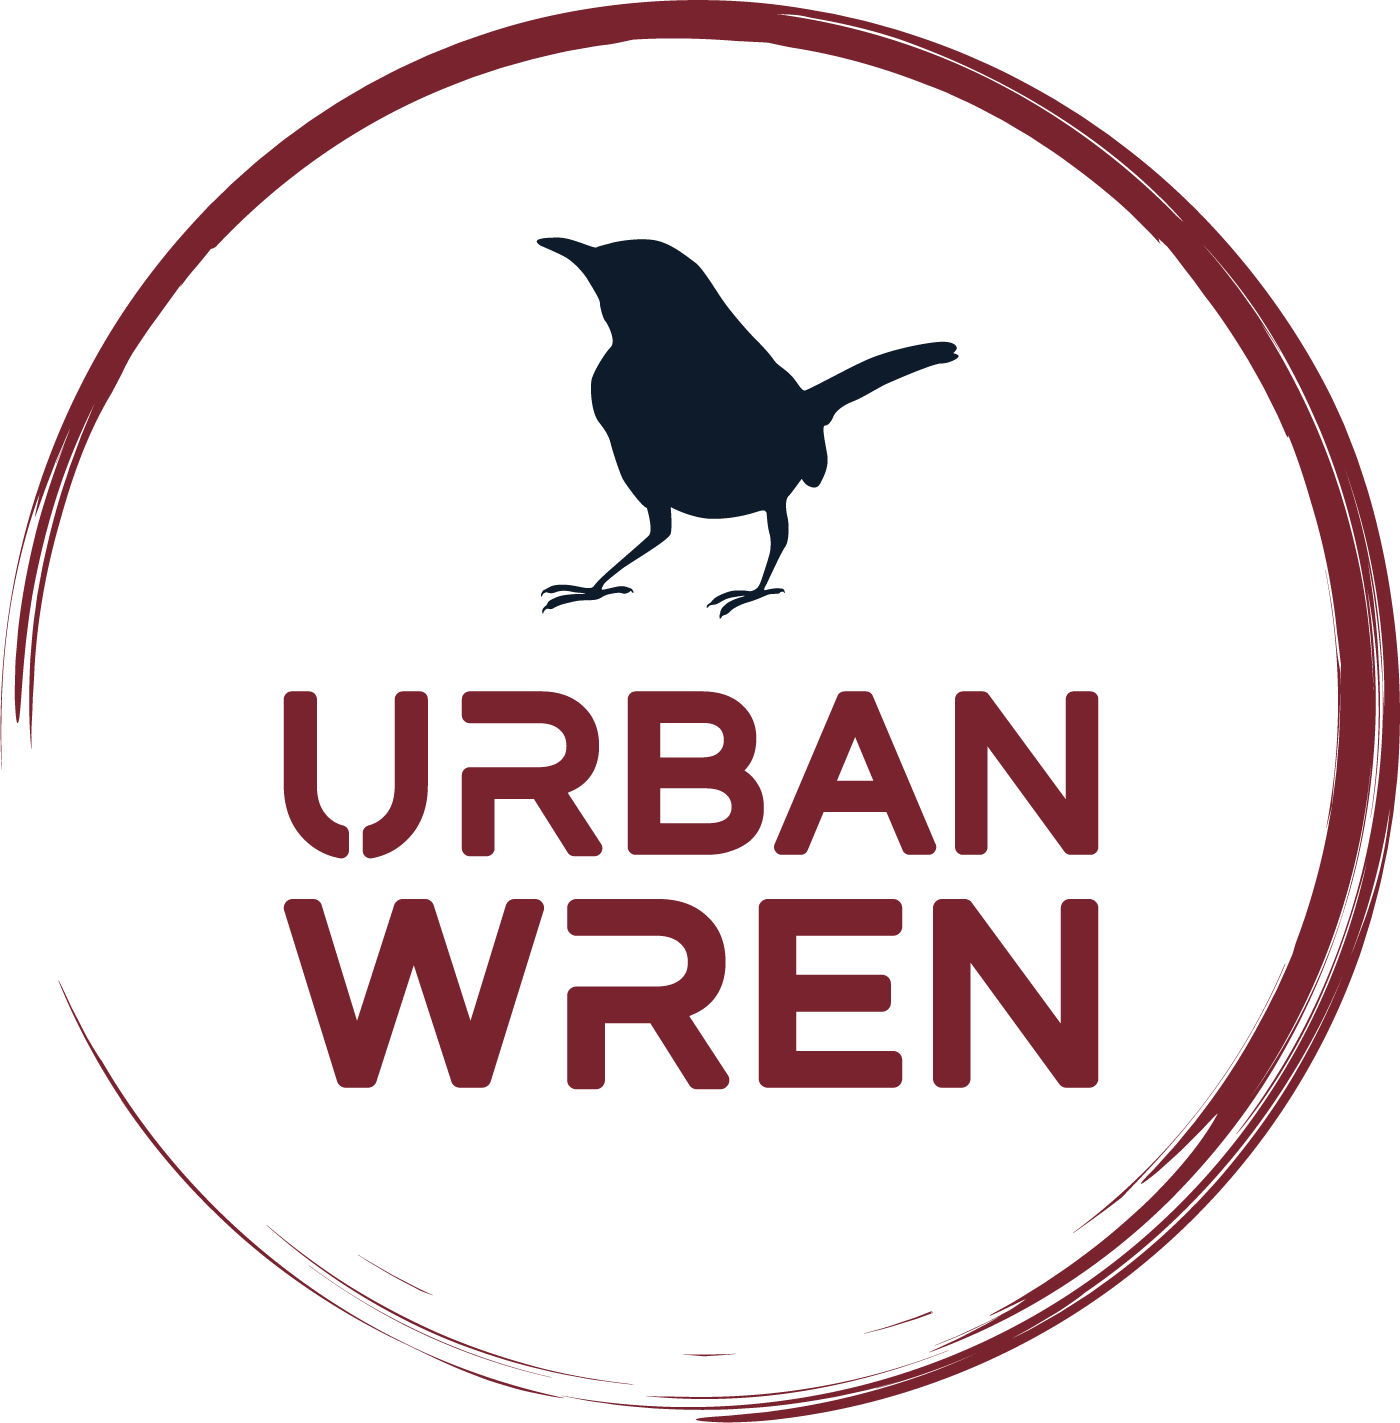 Uploaded Image: /uploads/Case Studies/Urban-Wren-logo.png